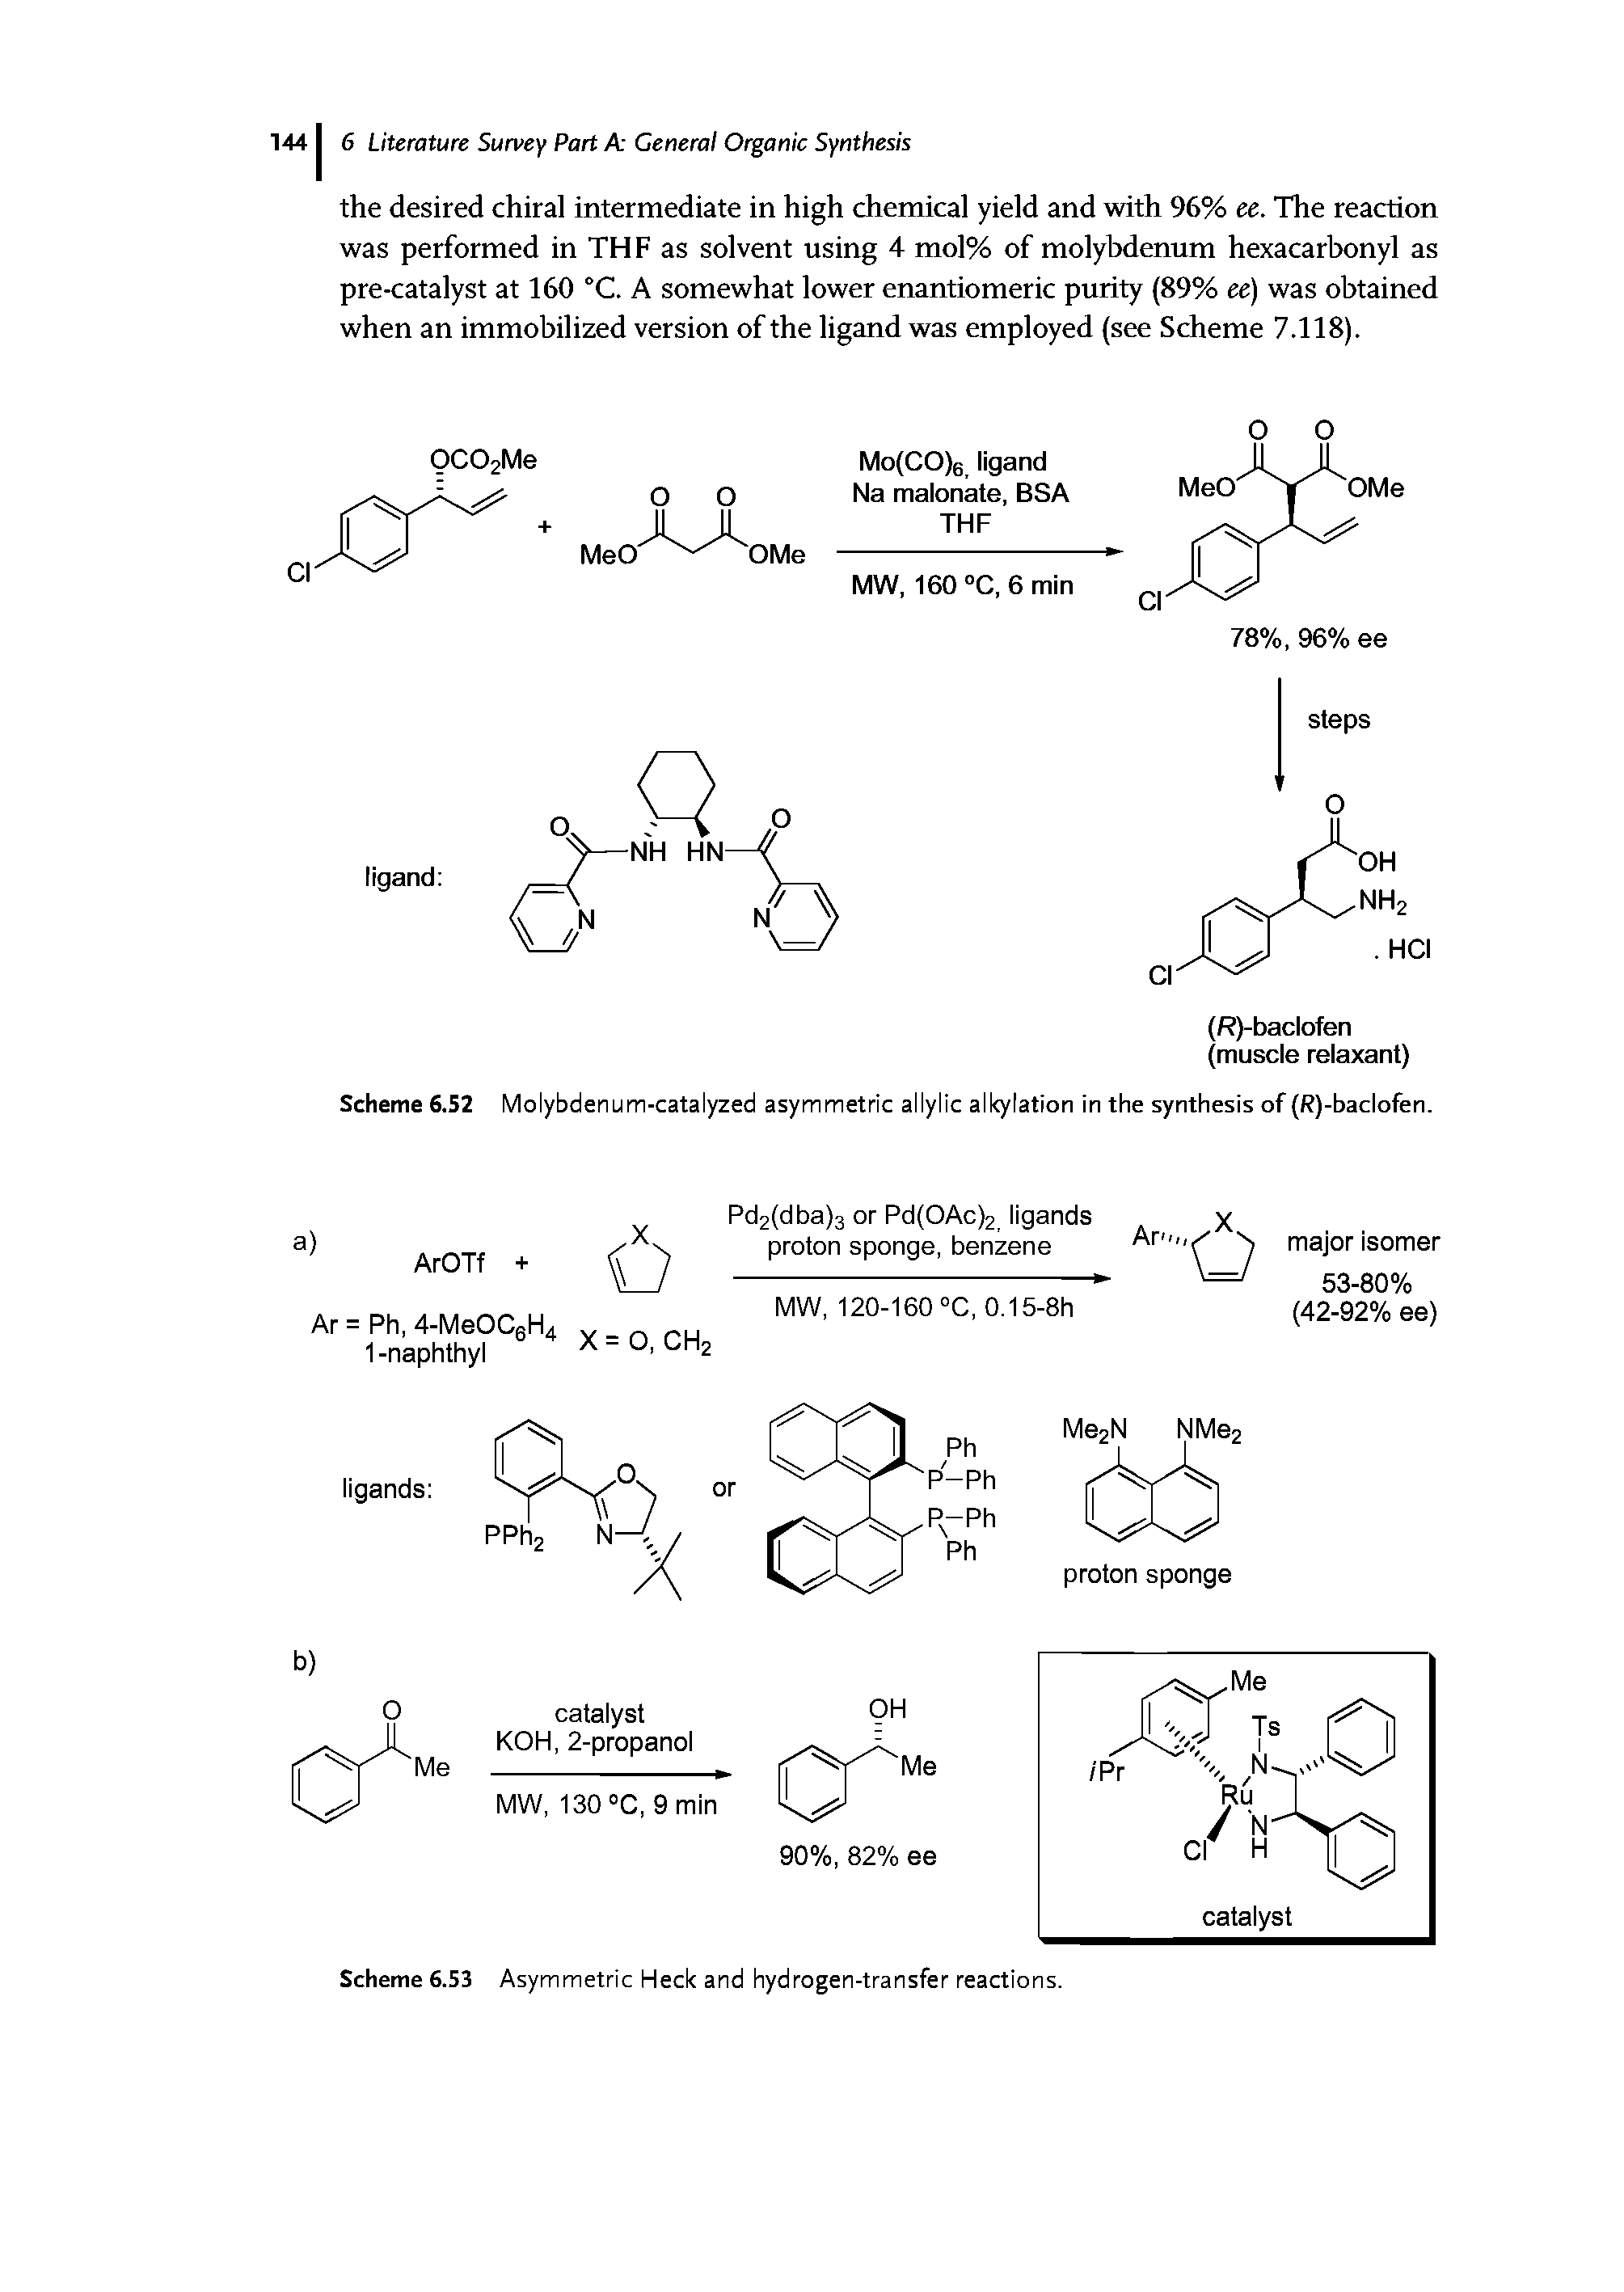 Scheme 6.53 Asymmetric Heck and hydrogen-transfer reactions.